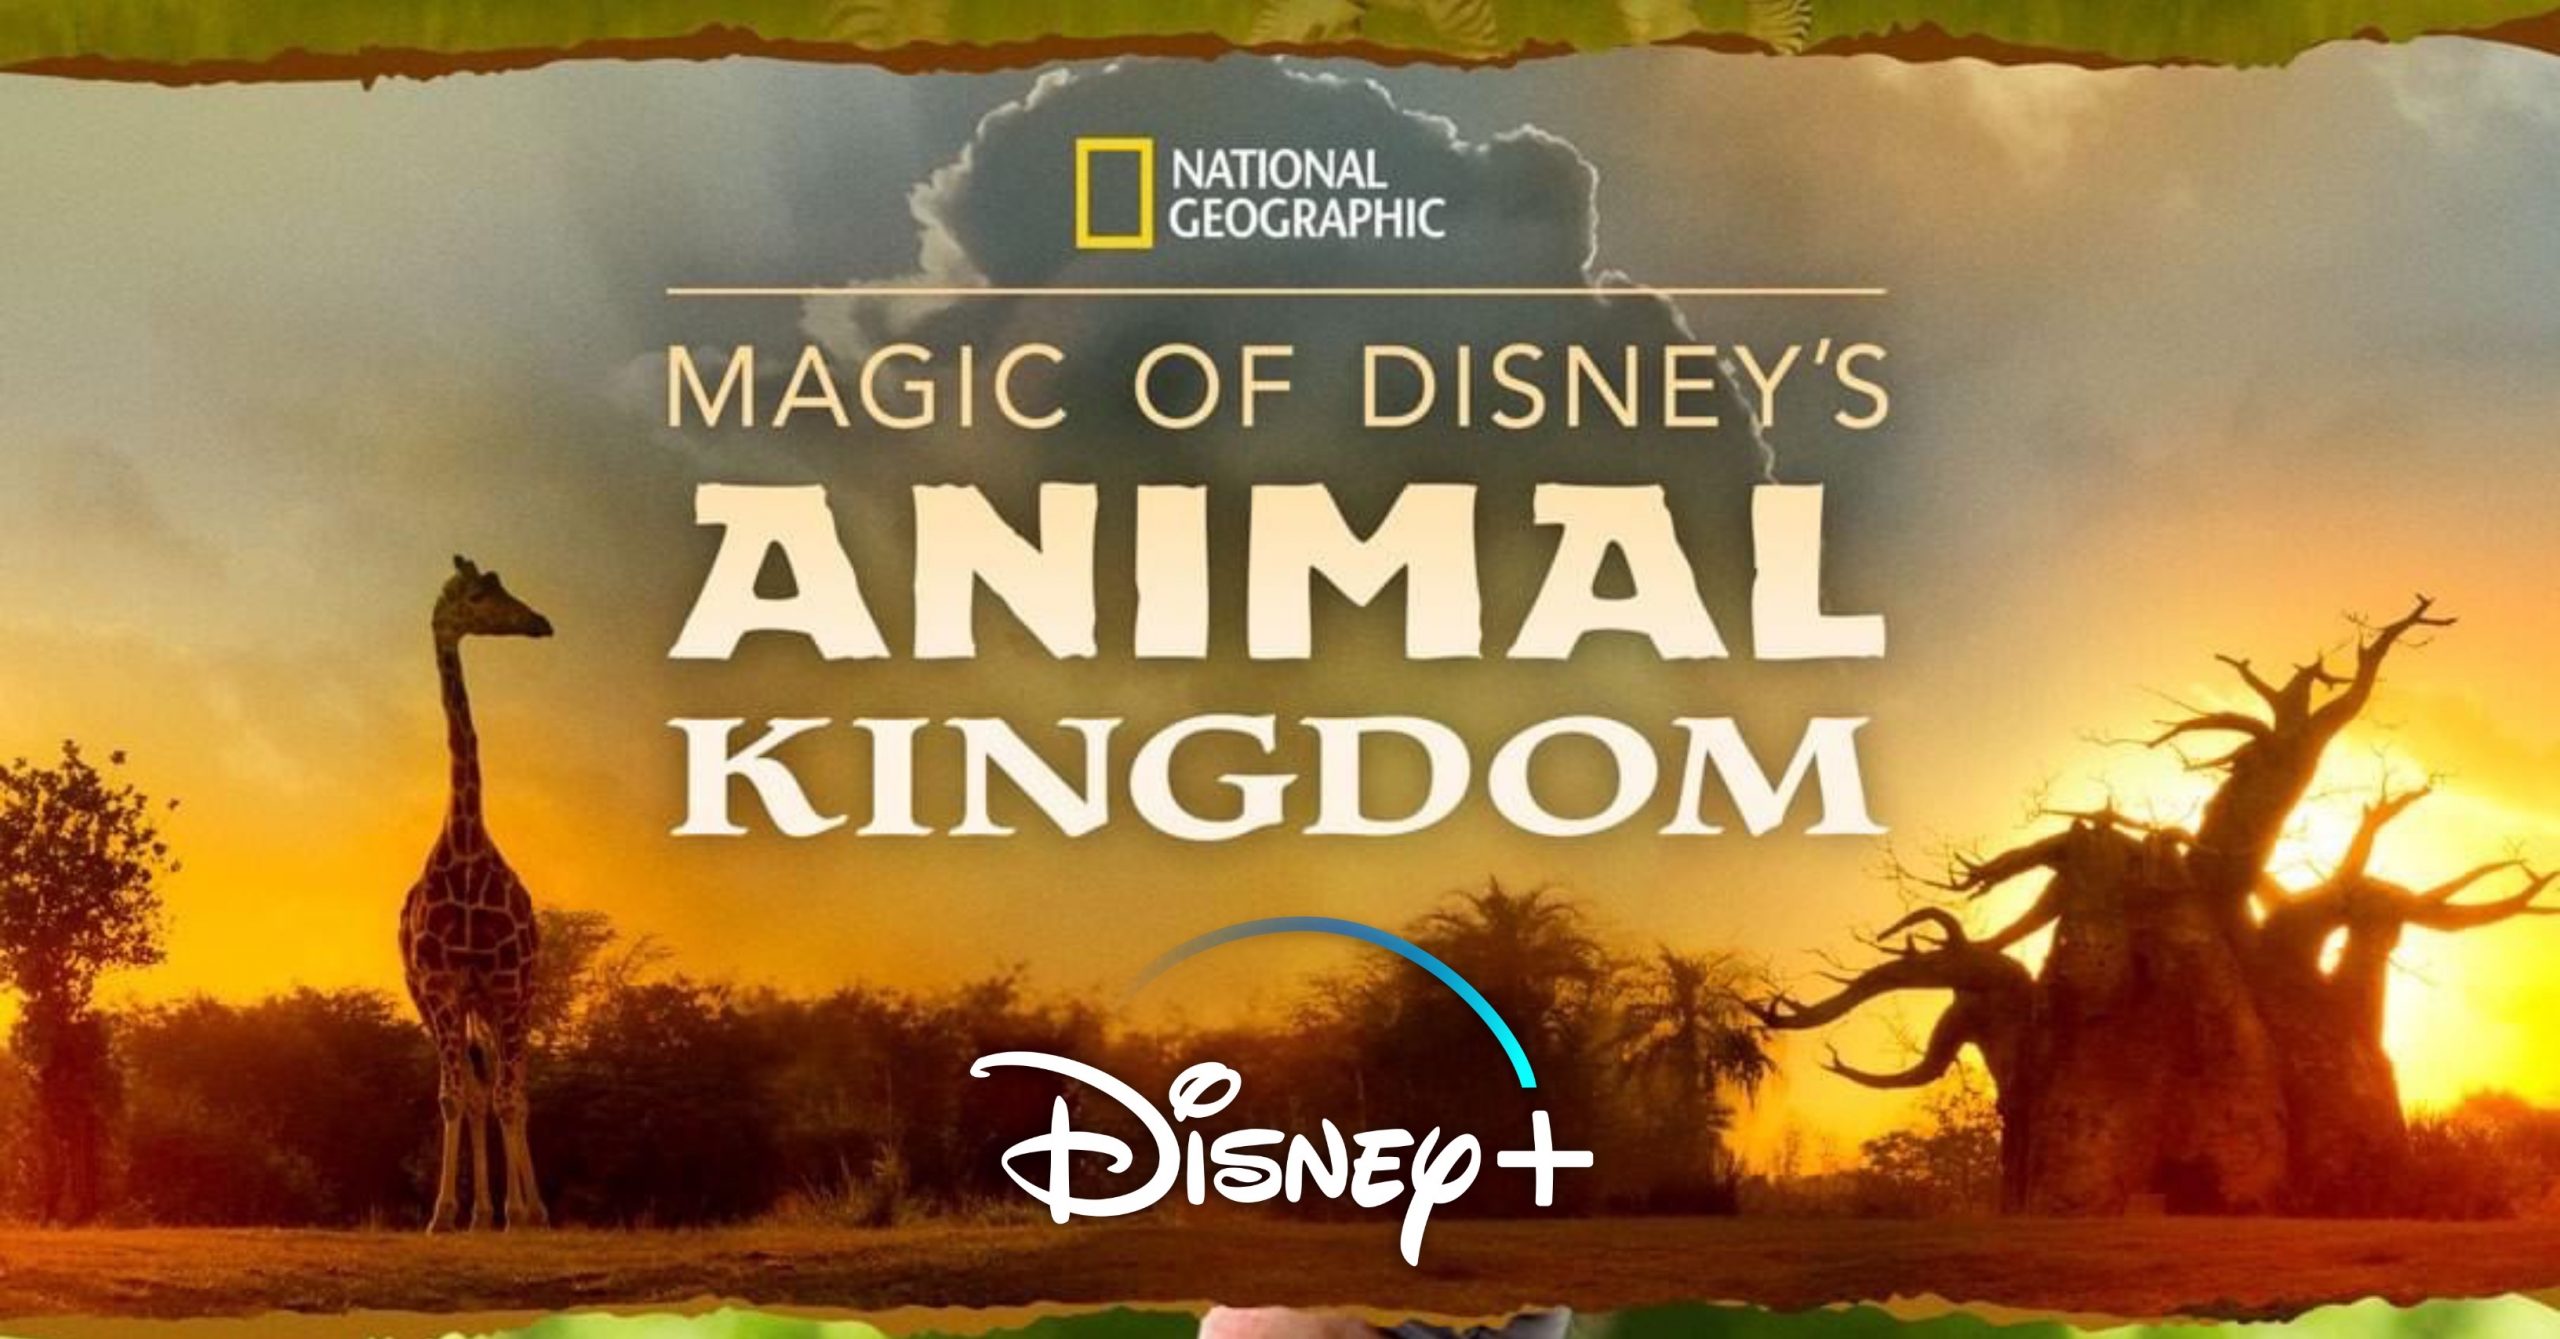 'magic of disney's animal kingdom' from national